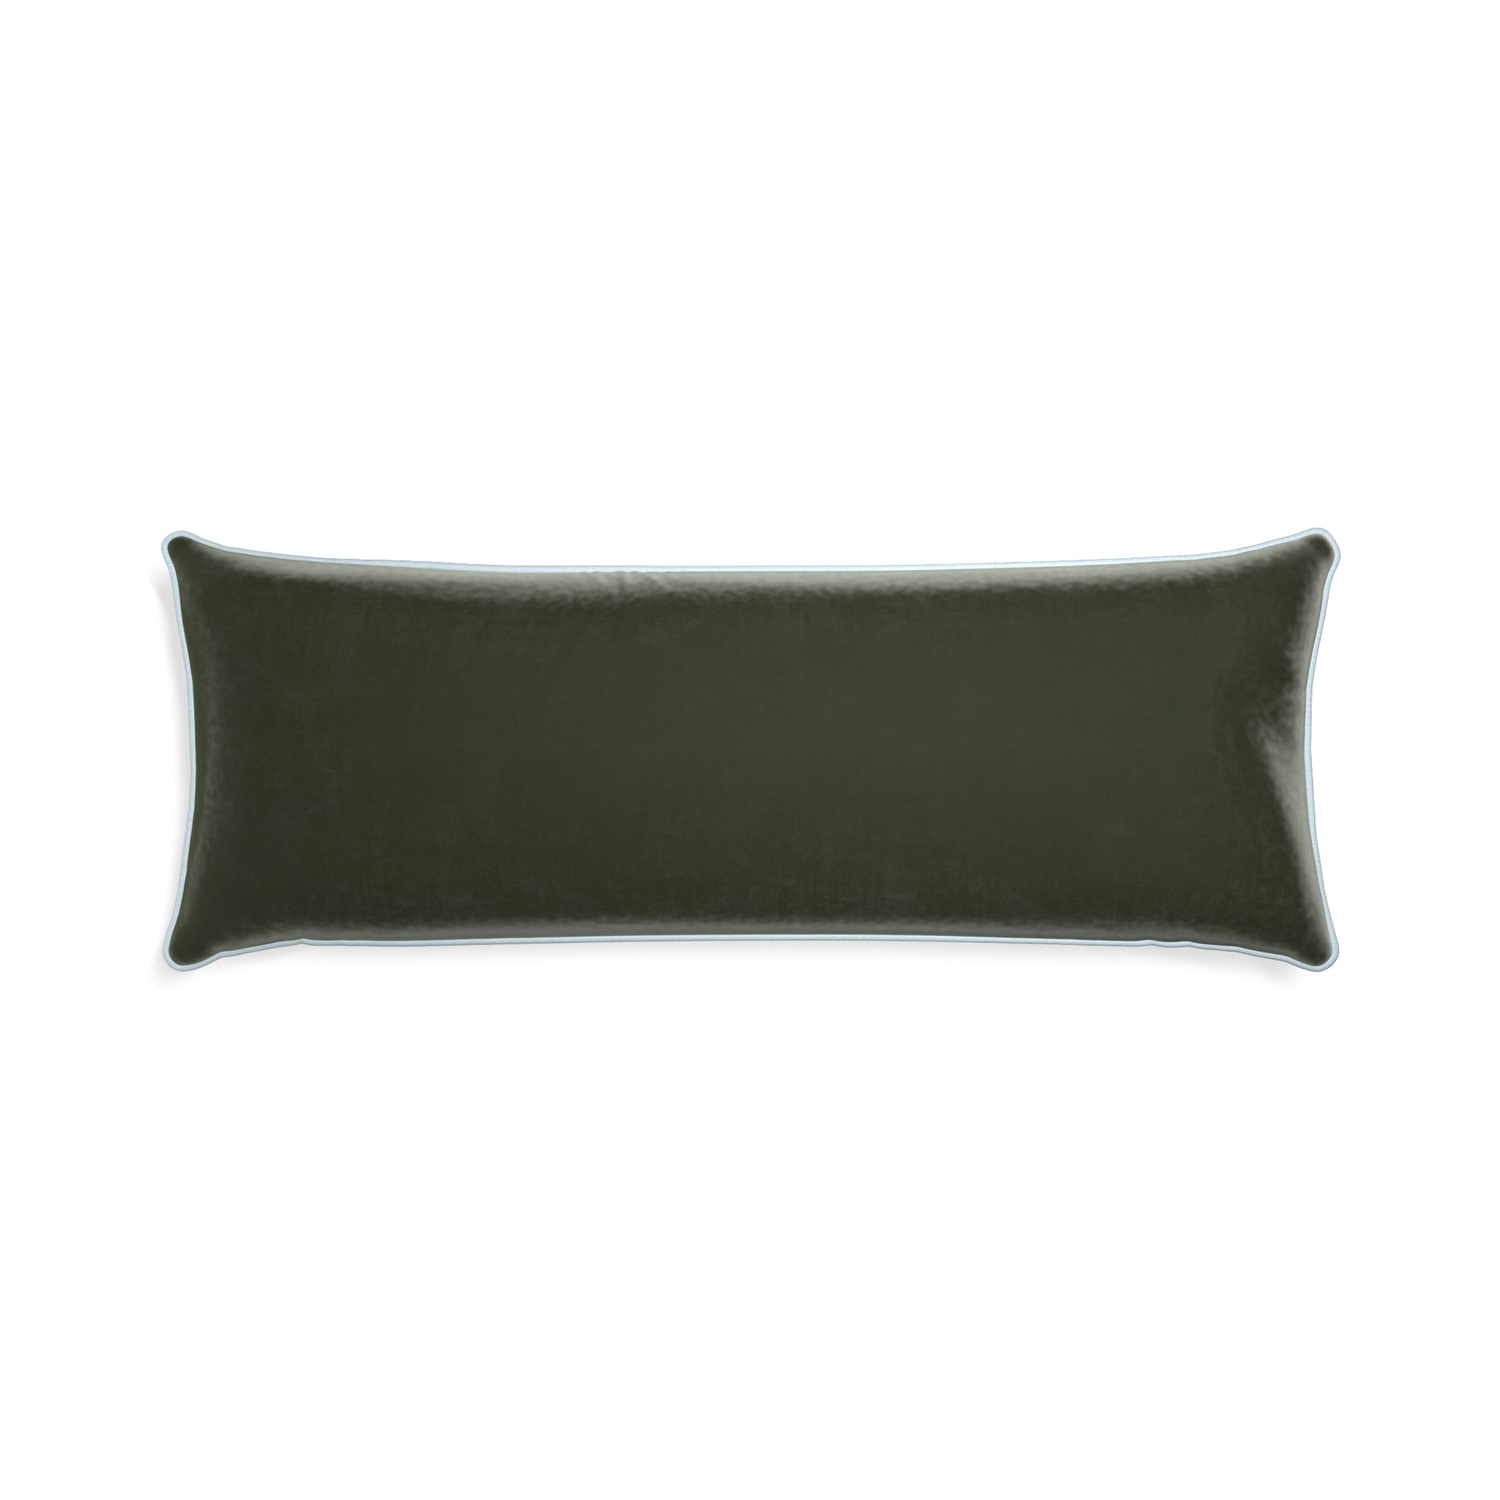 Xl-lumbar fern velvet custom pillow with powder piping on white background